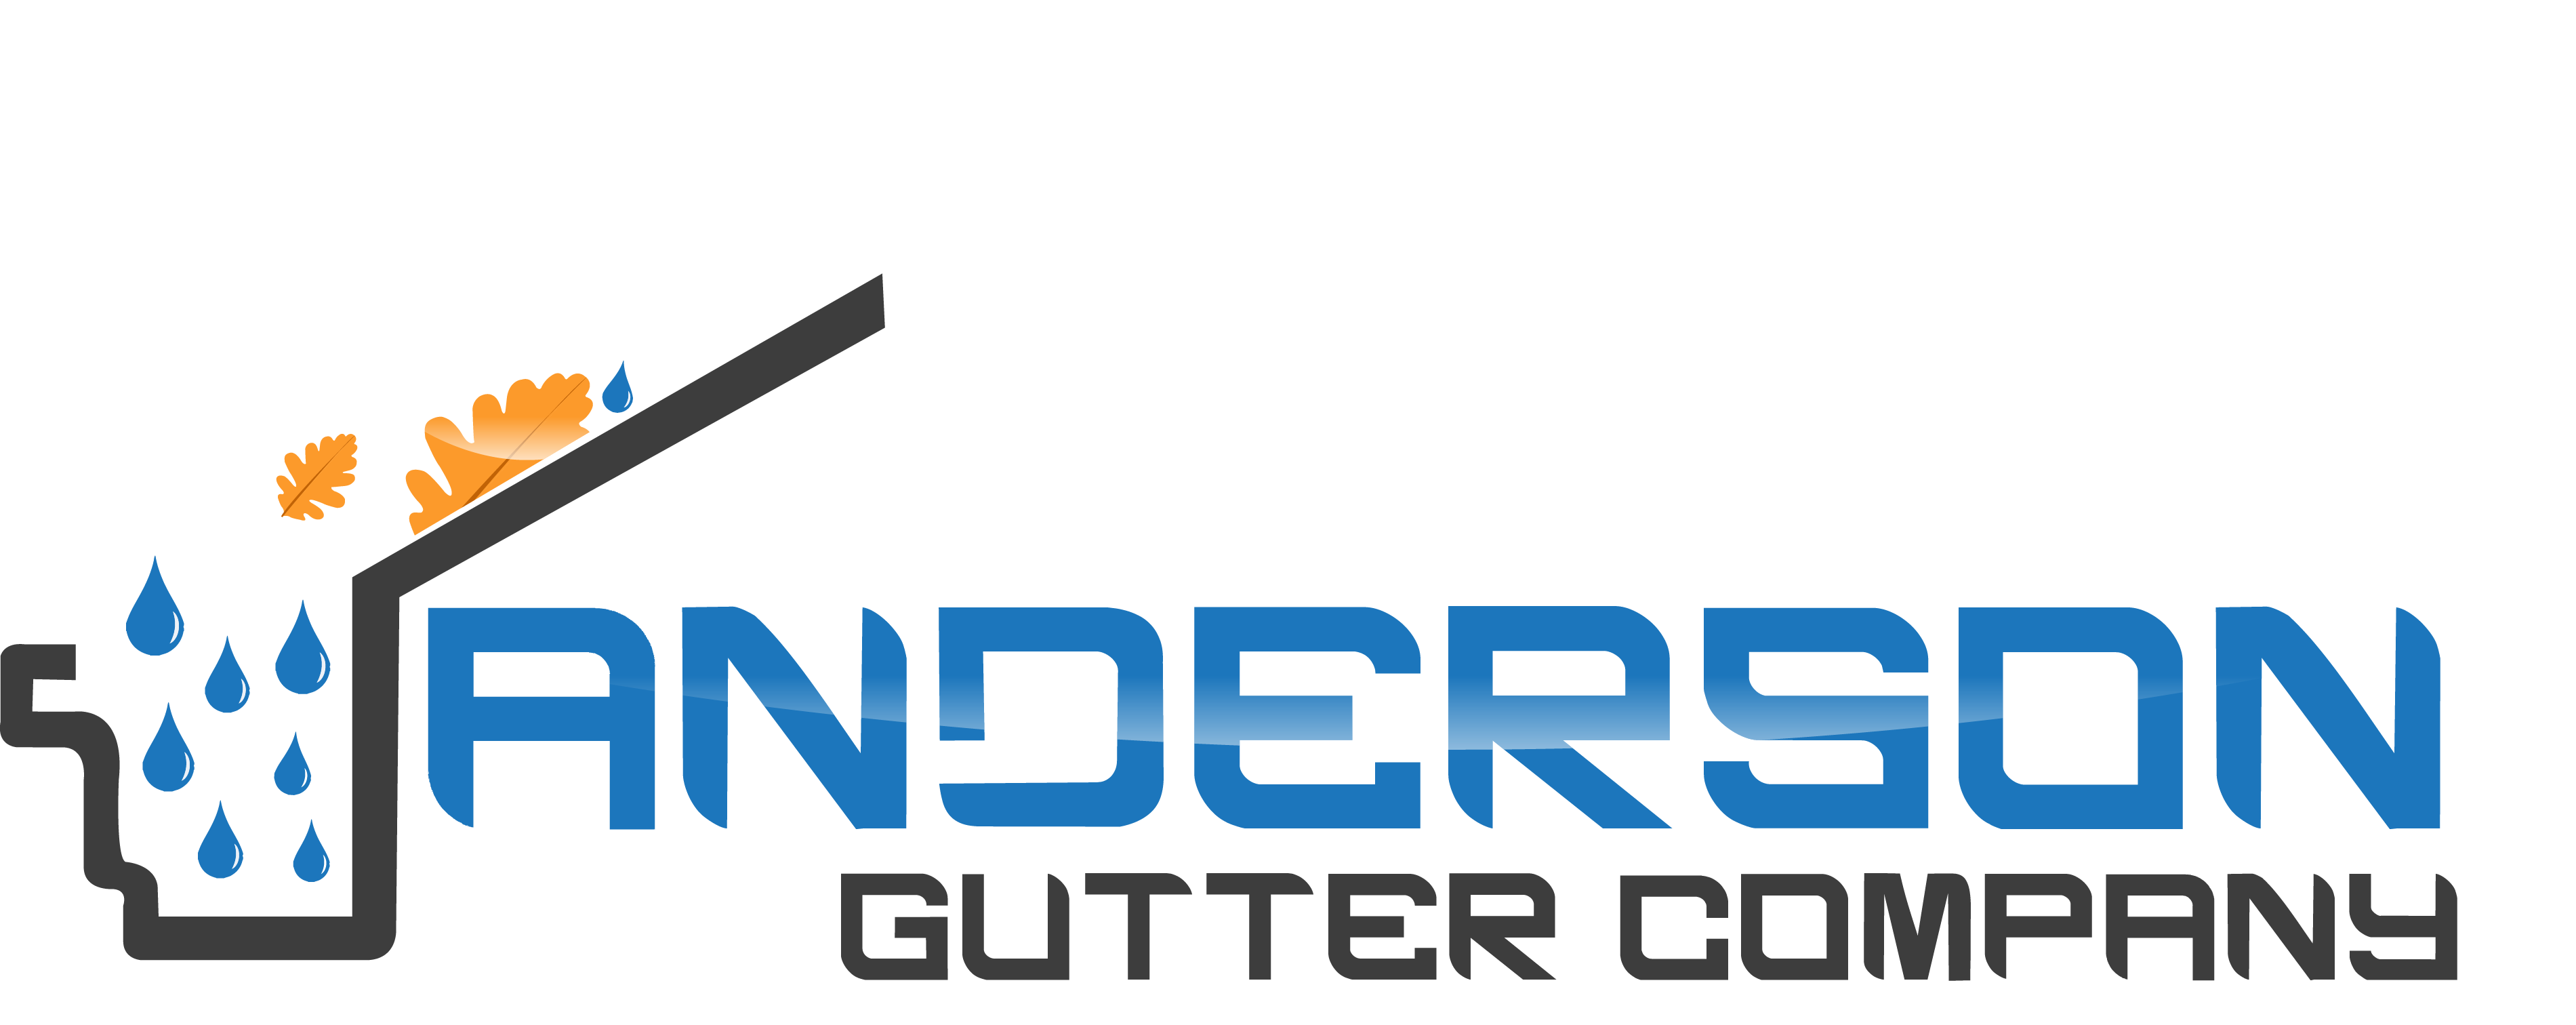 Anderson Gutter Company, LLC Logo